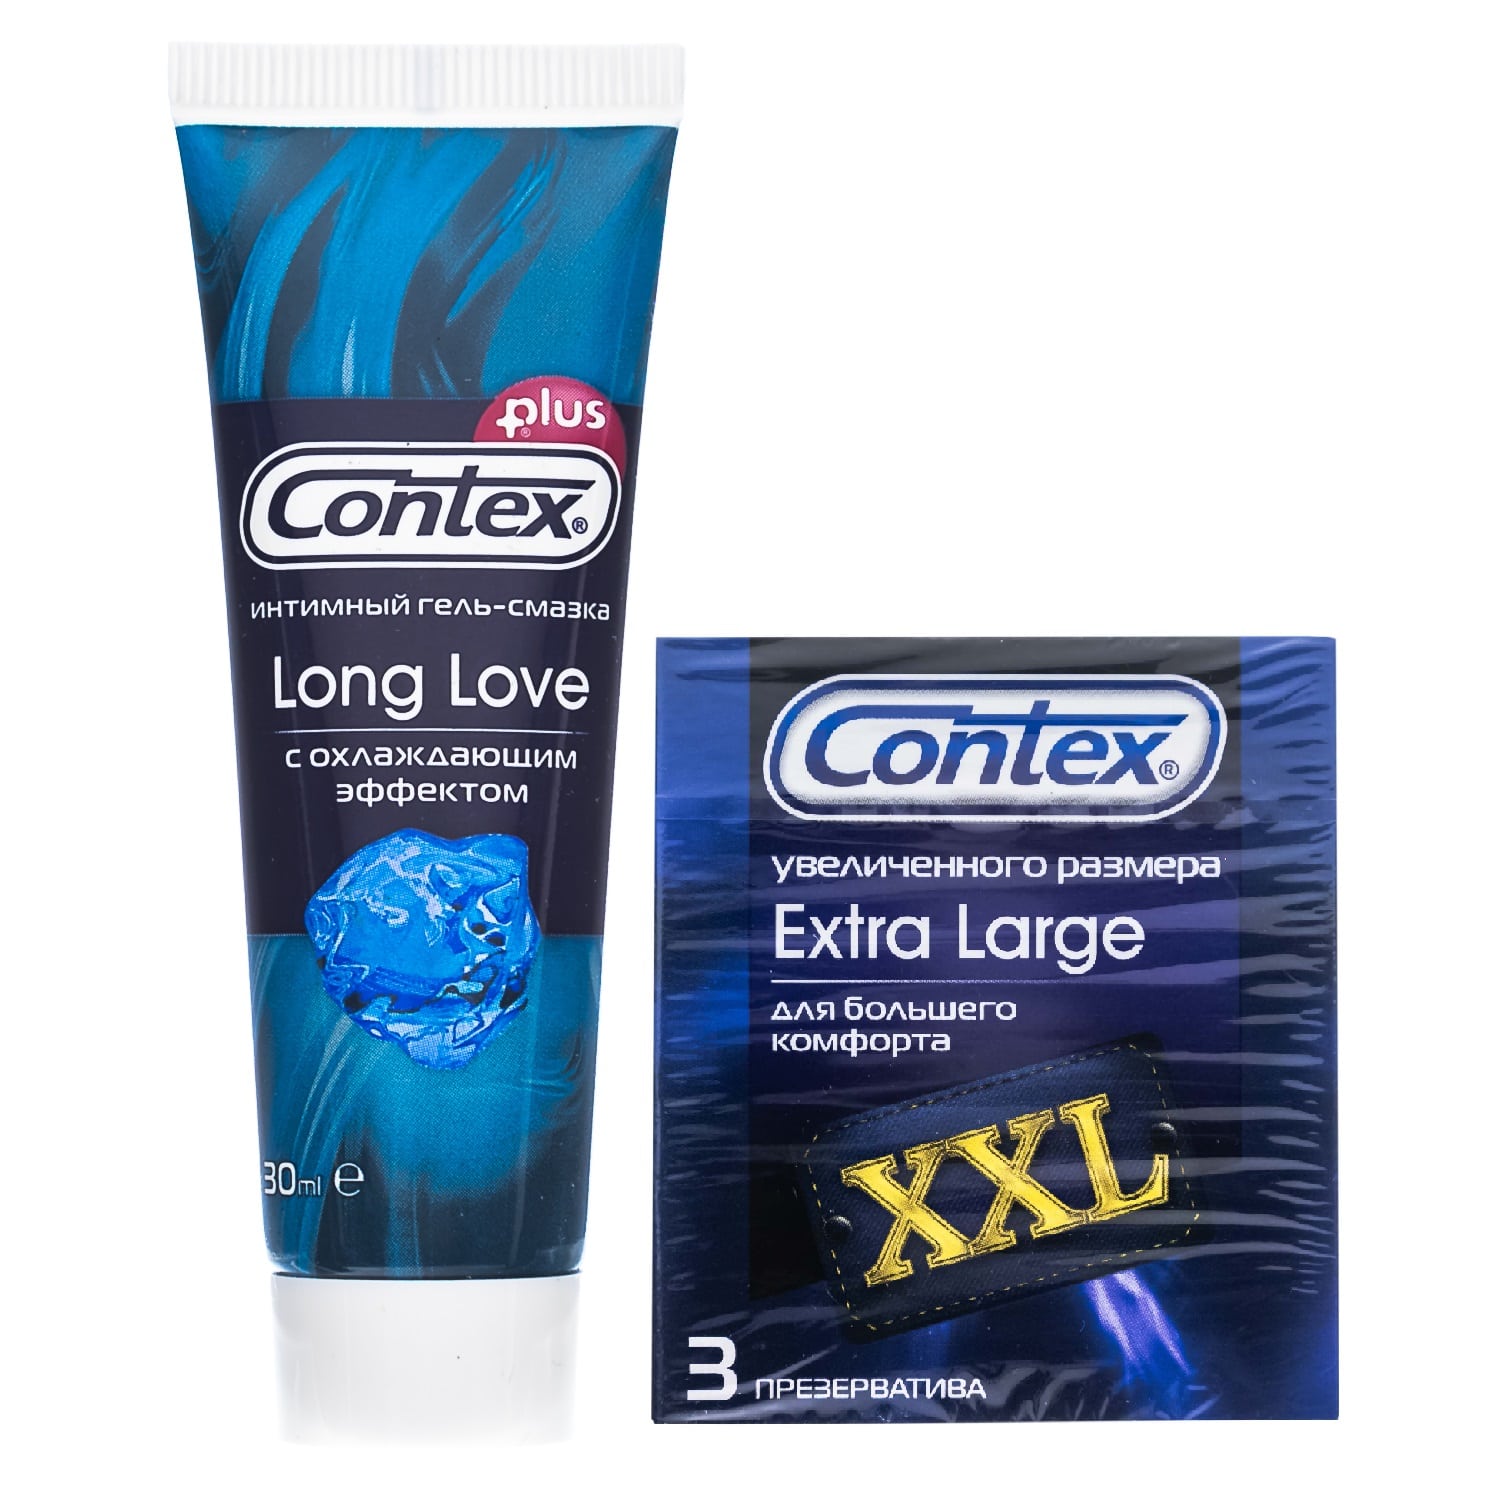 Contex Набор: презервативы Extra Large XXL №3 + гель-смазка продлевающий акт 30 мл (Contex, Презервативы)